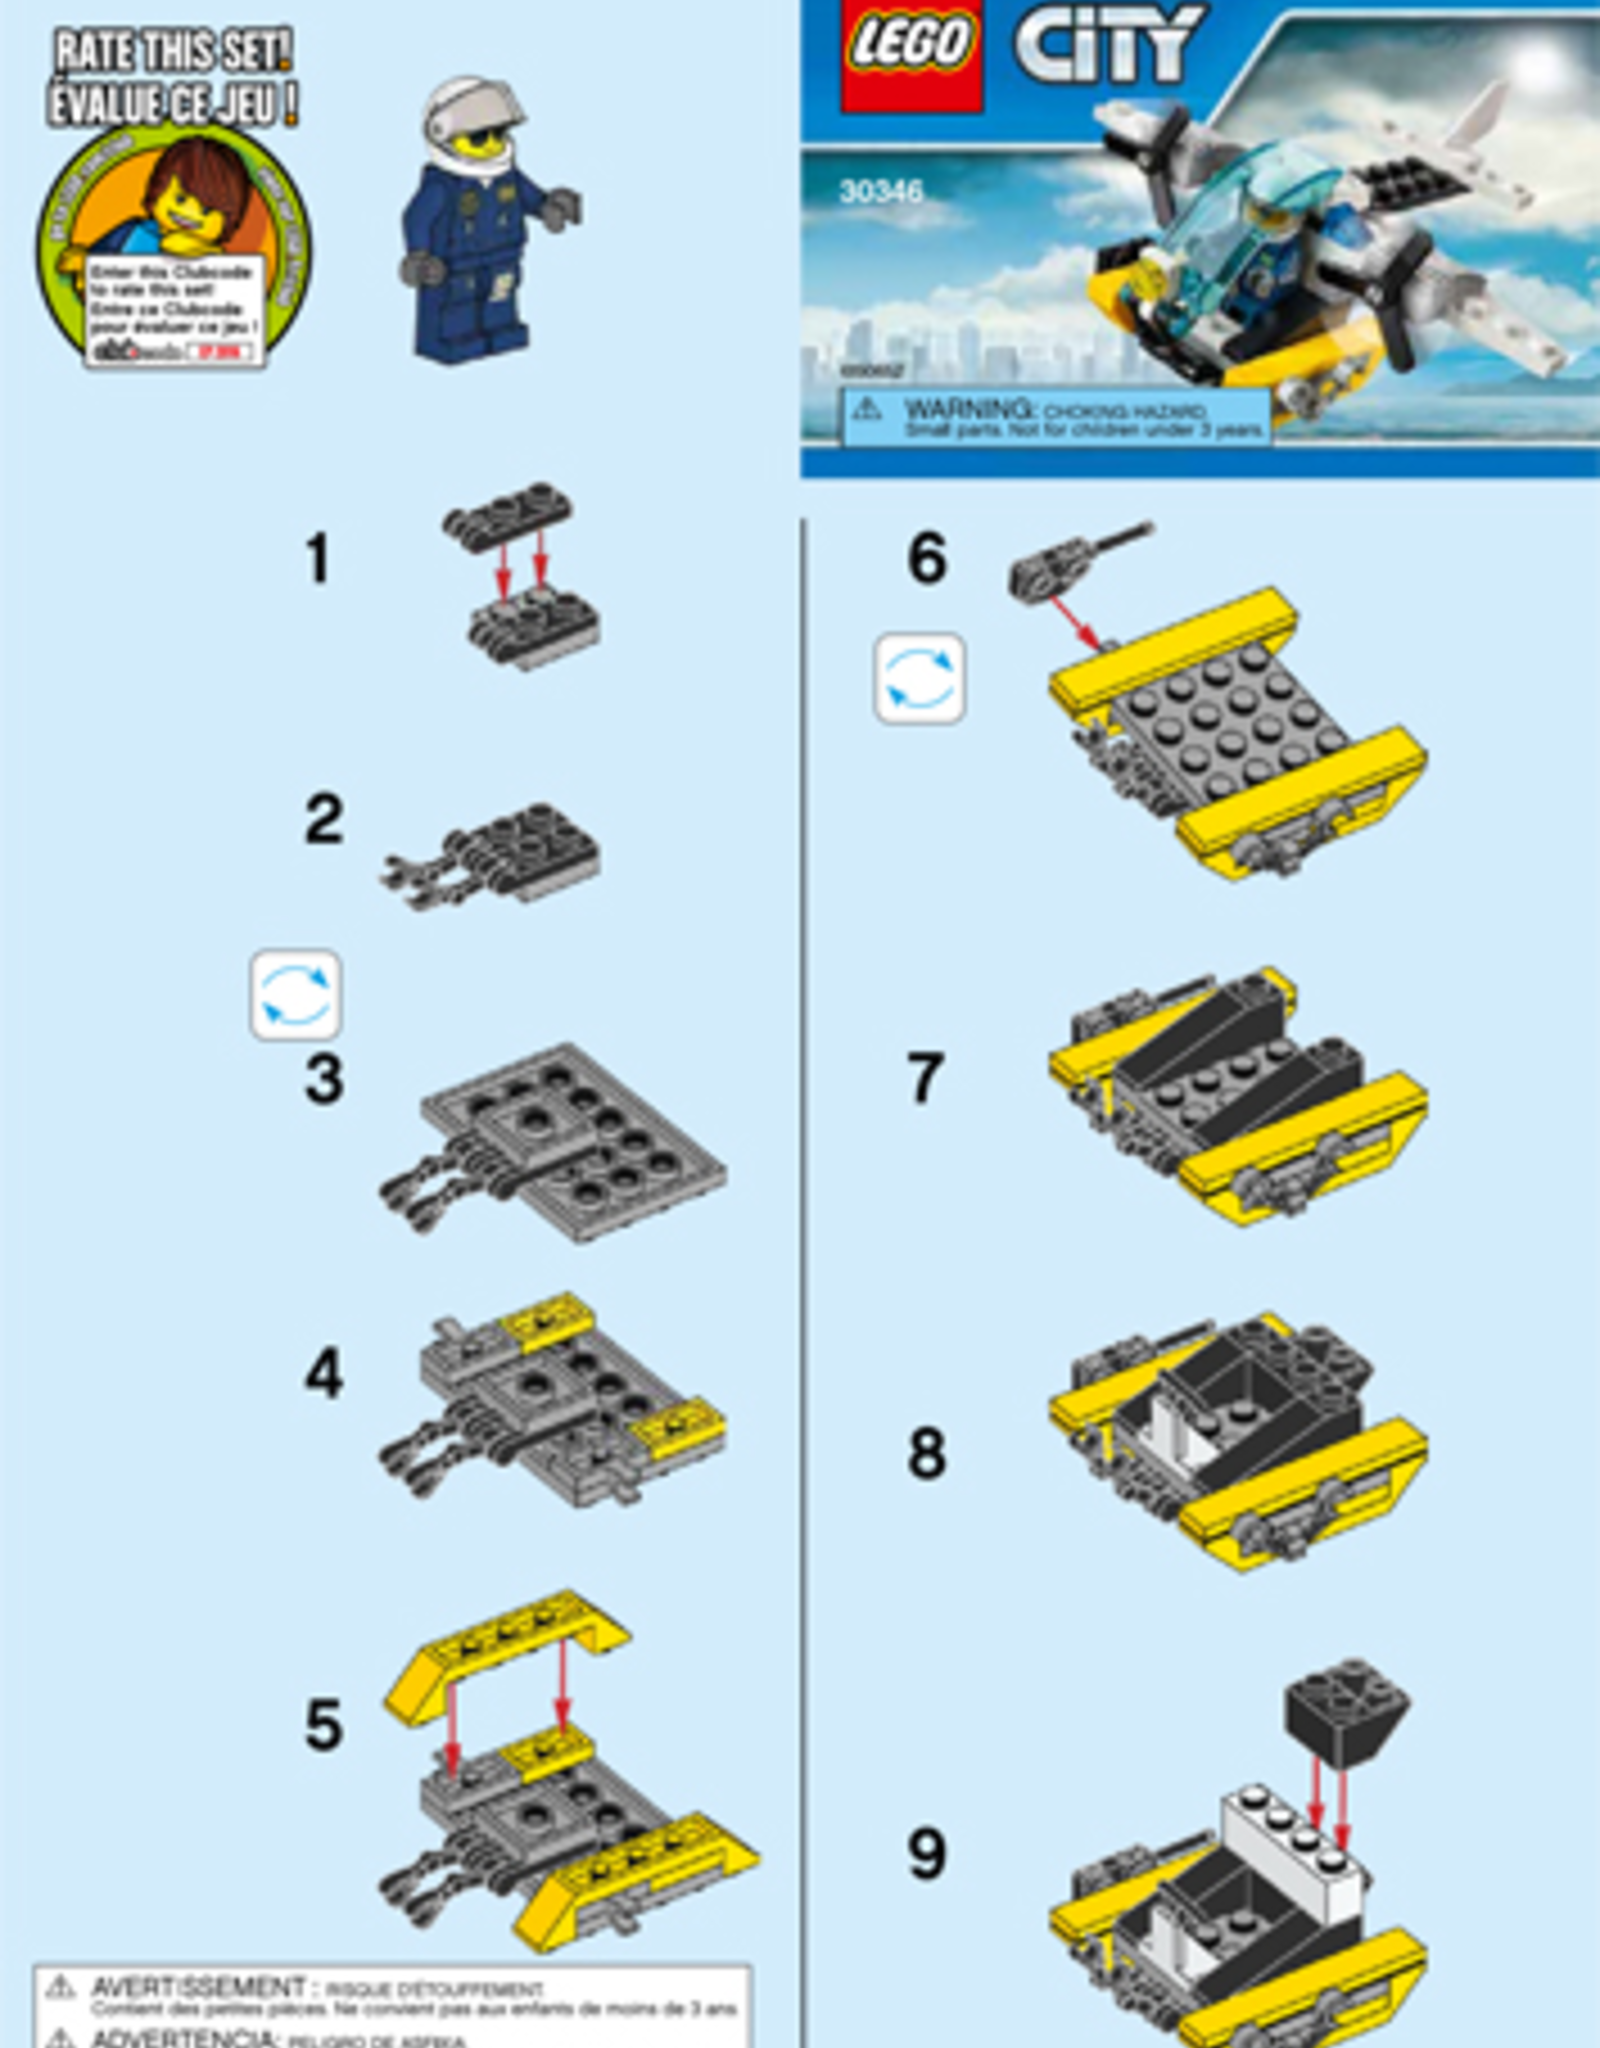 LEGO LEGO 30346 Prison Island Helicopter CITY